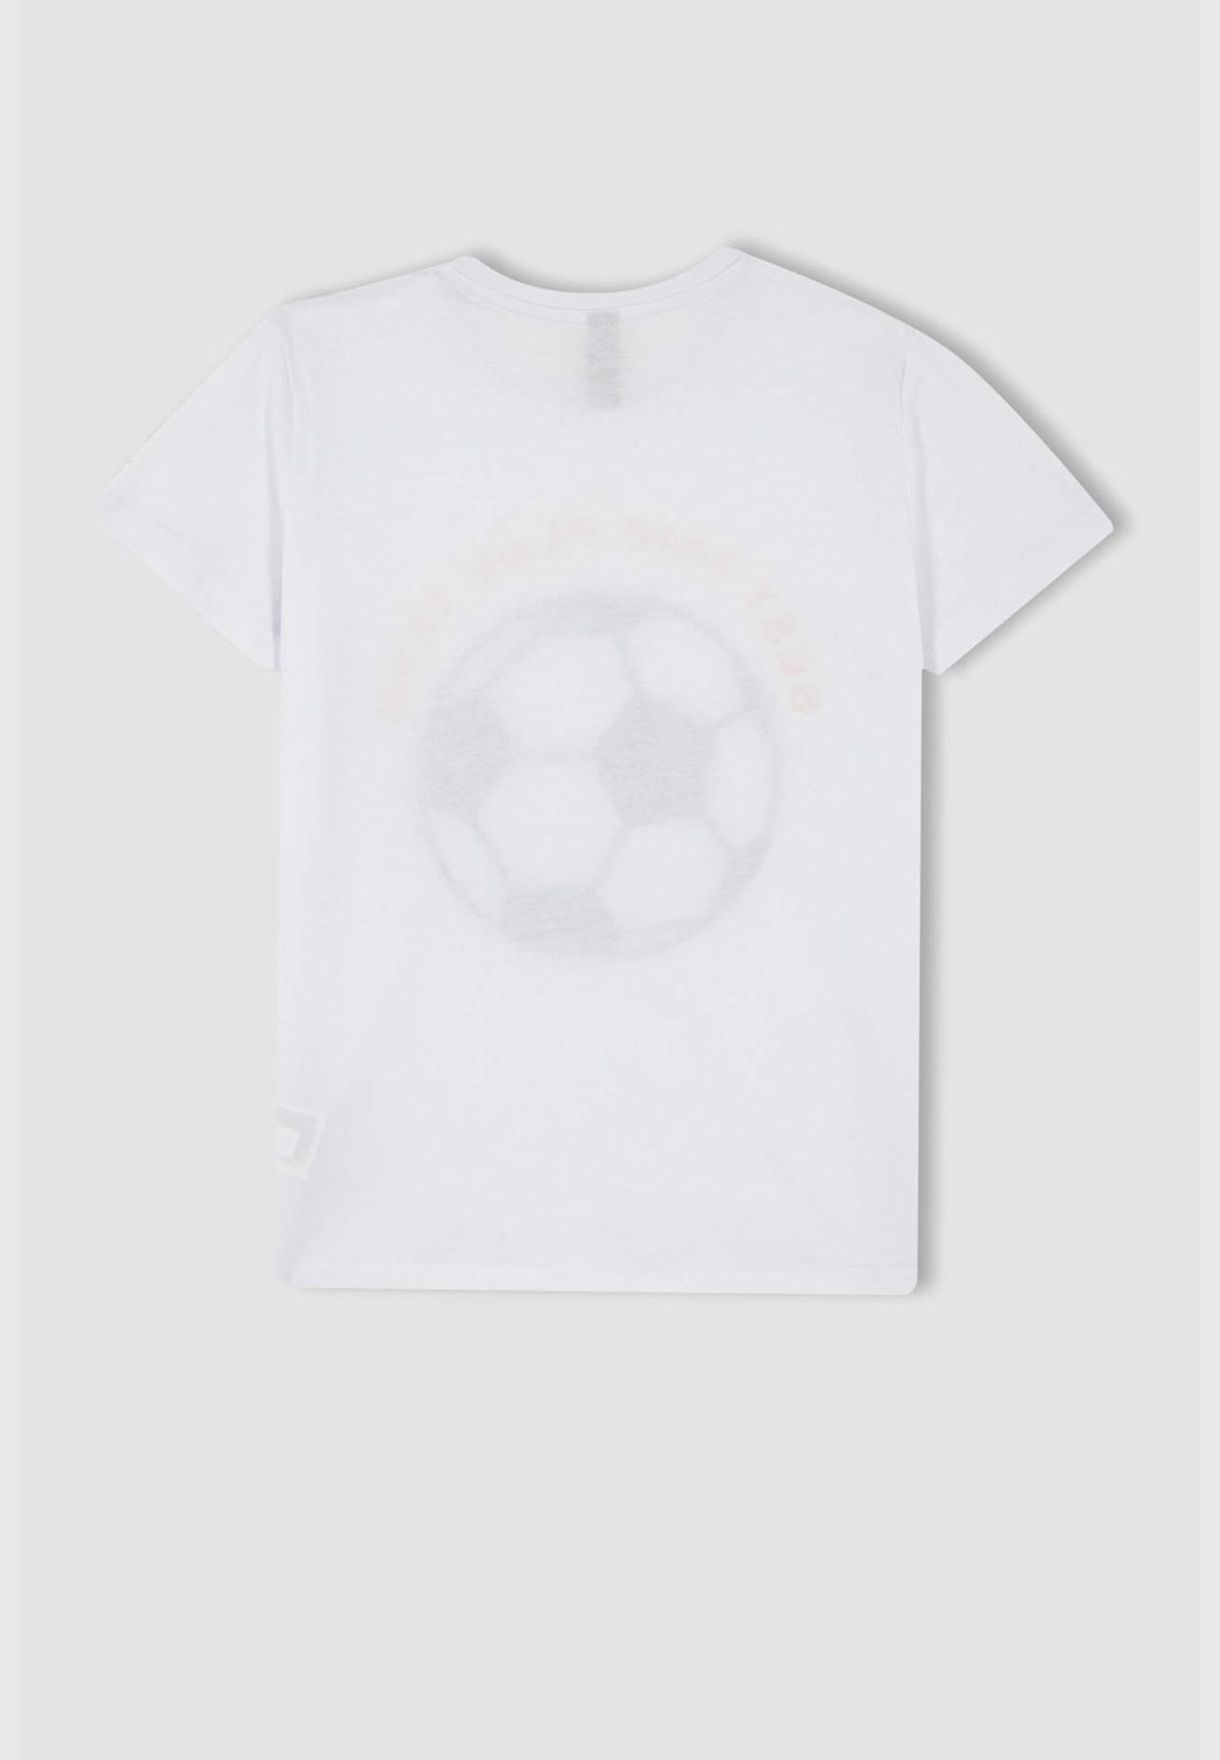 Short Sleeve Football Printed Pyjama Top